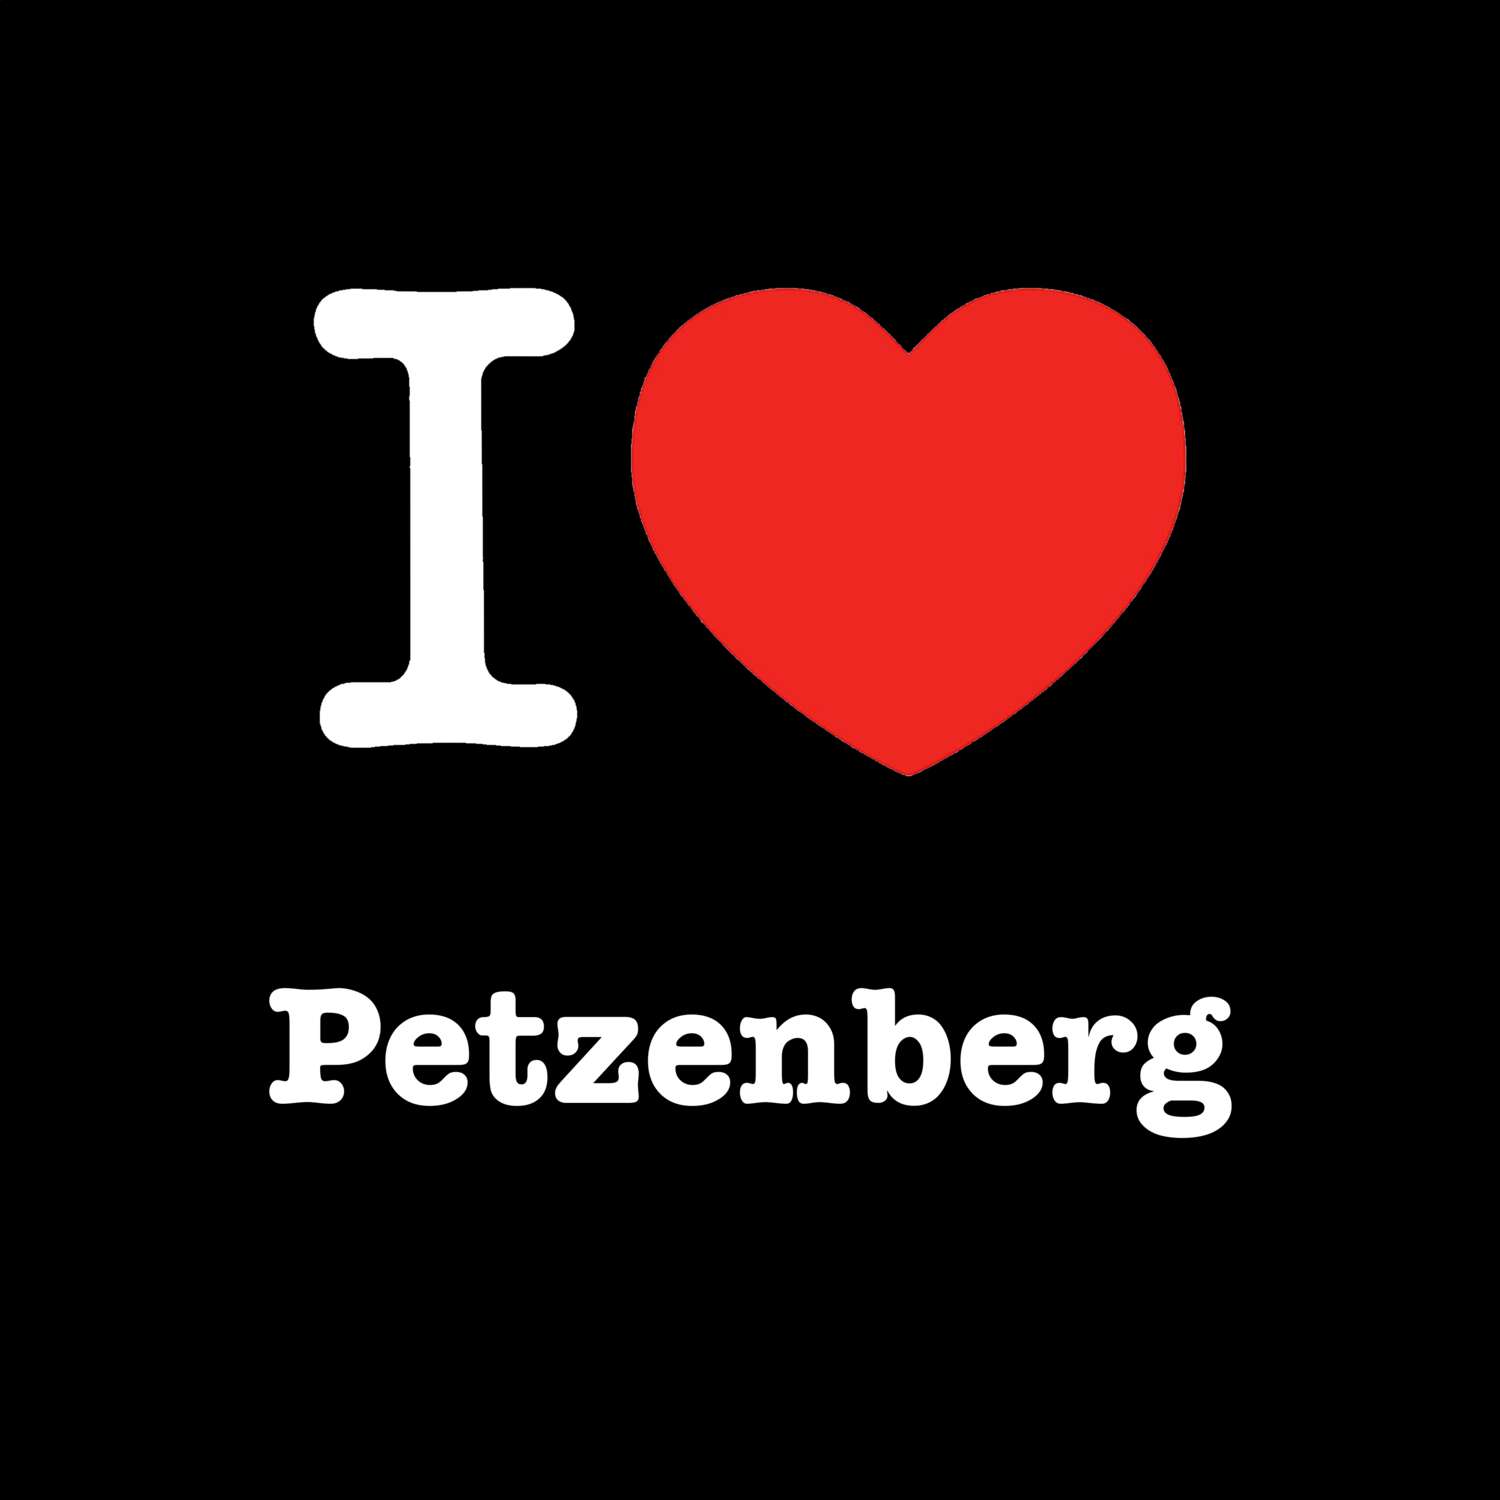 Petzenberg T-Shirt »I love«